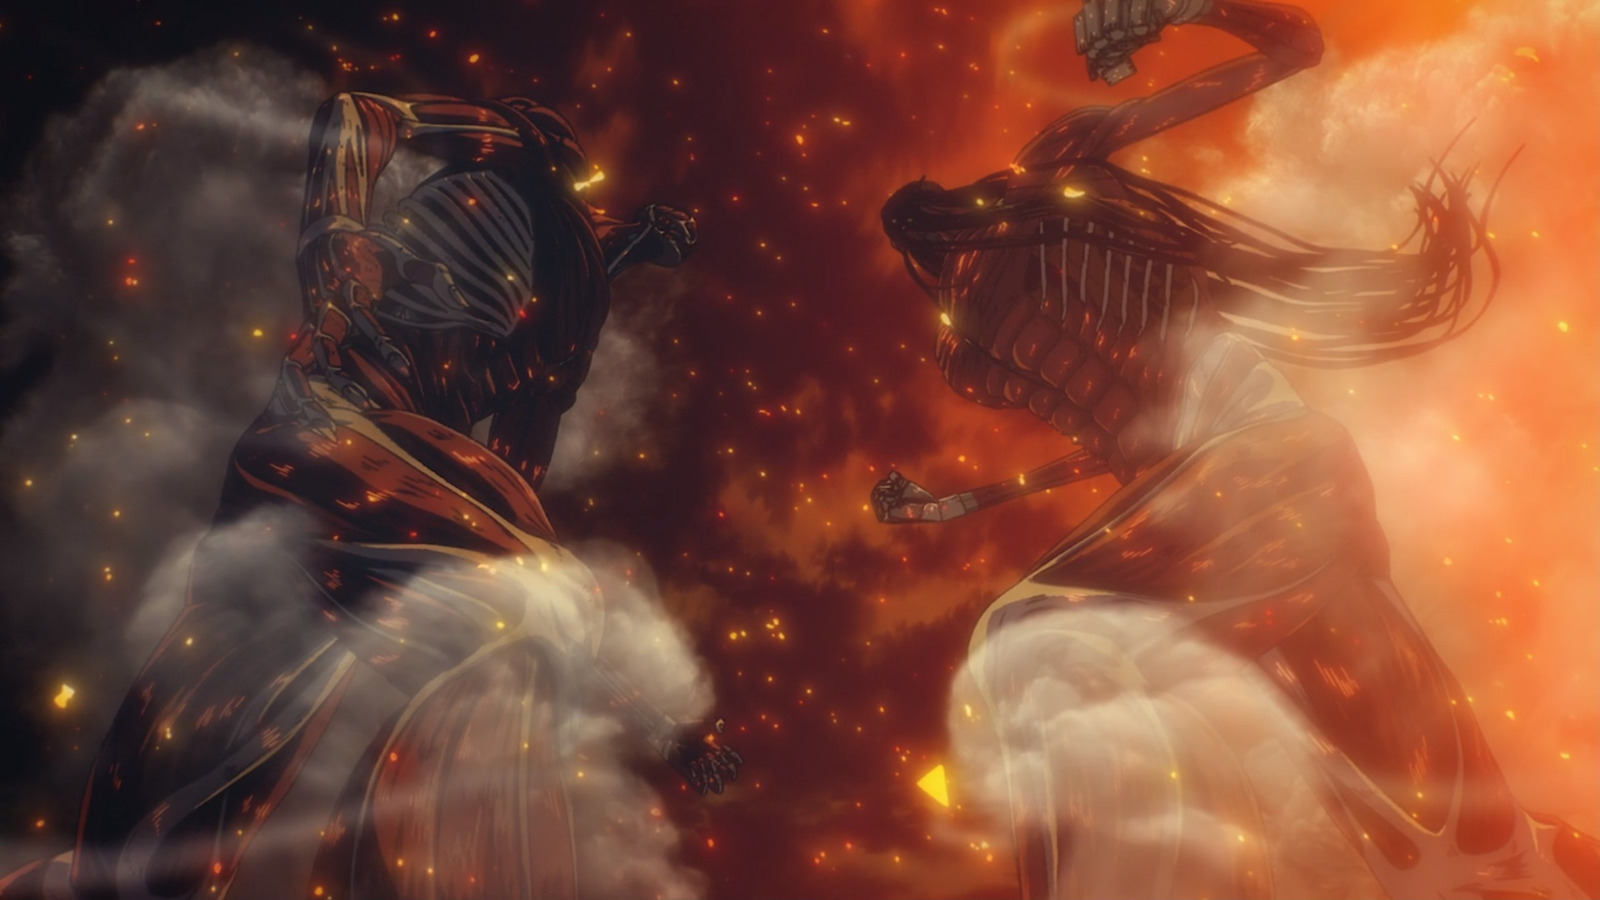 Attack on Titan Anime Ending Explained & Spoilers: Was Eren's Plan